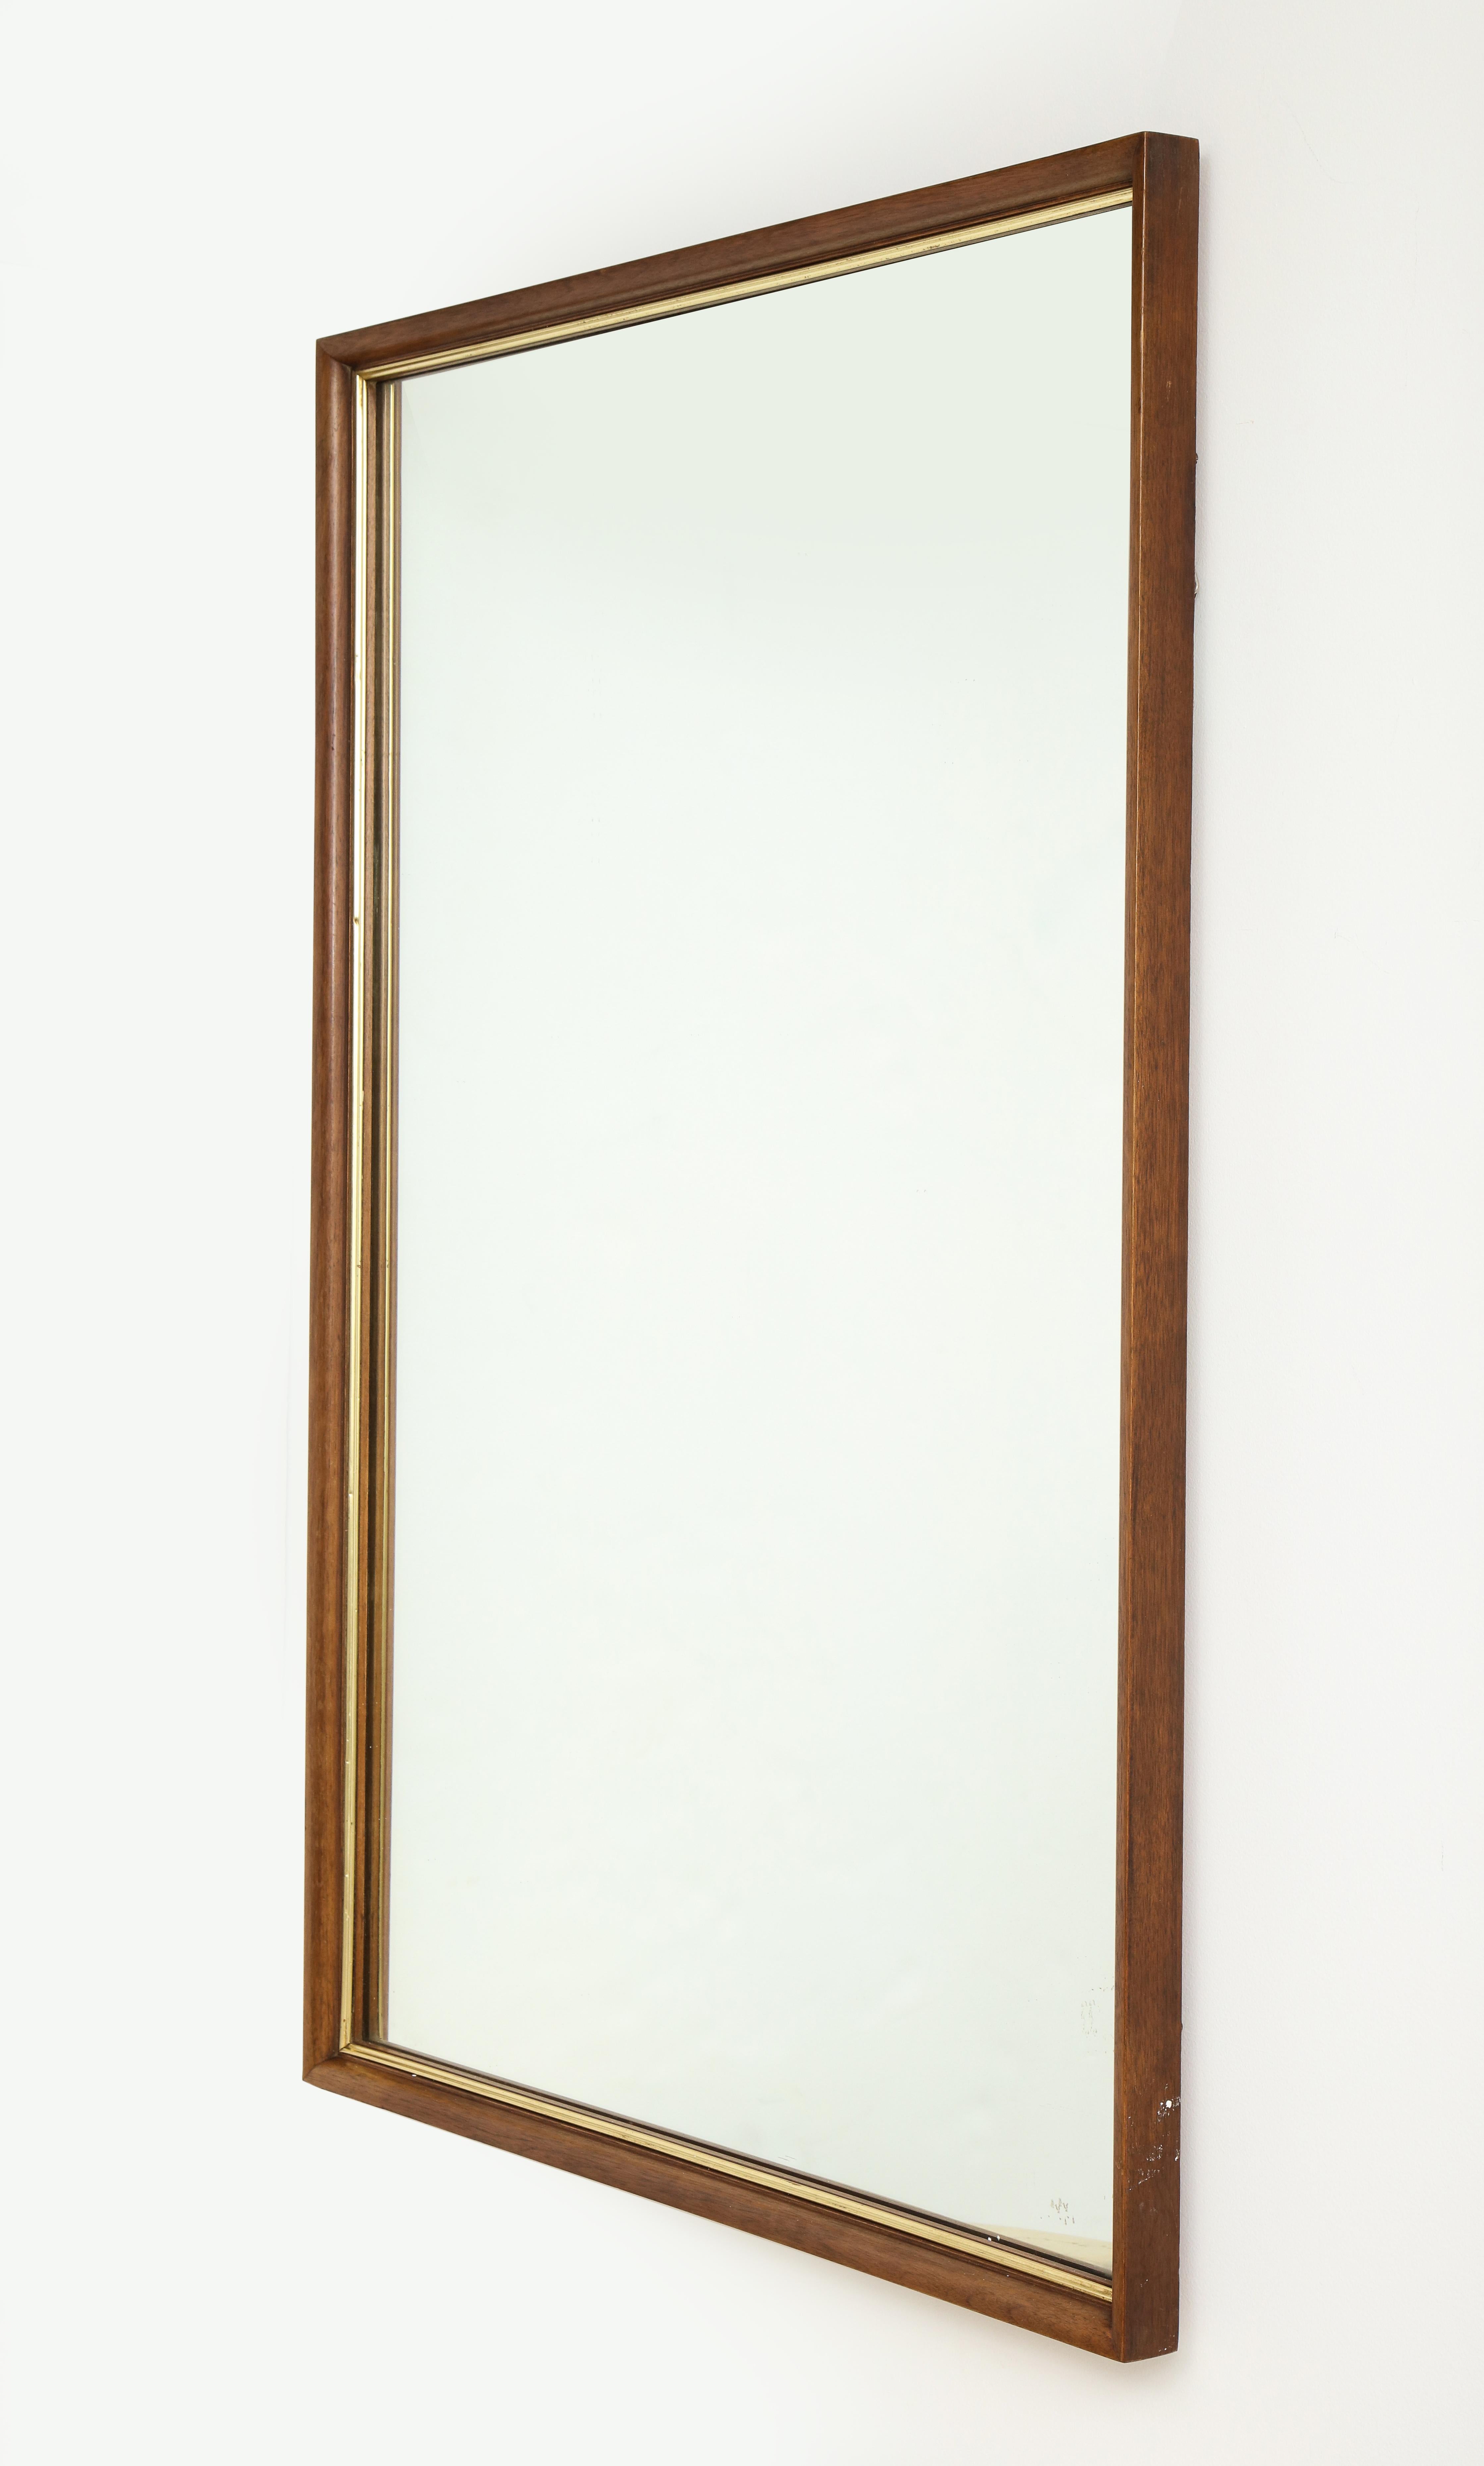 20th century walnut and brass mirror, signed 